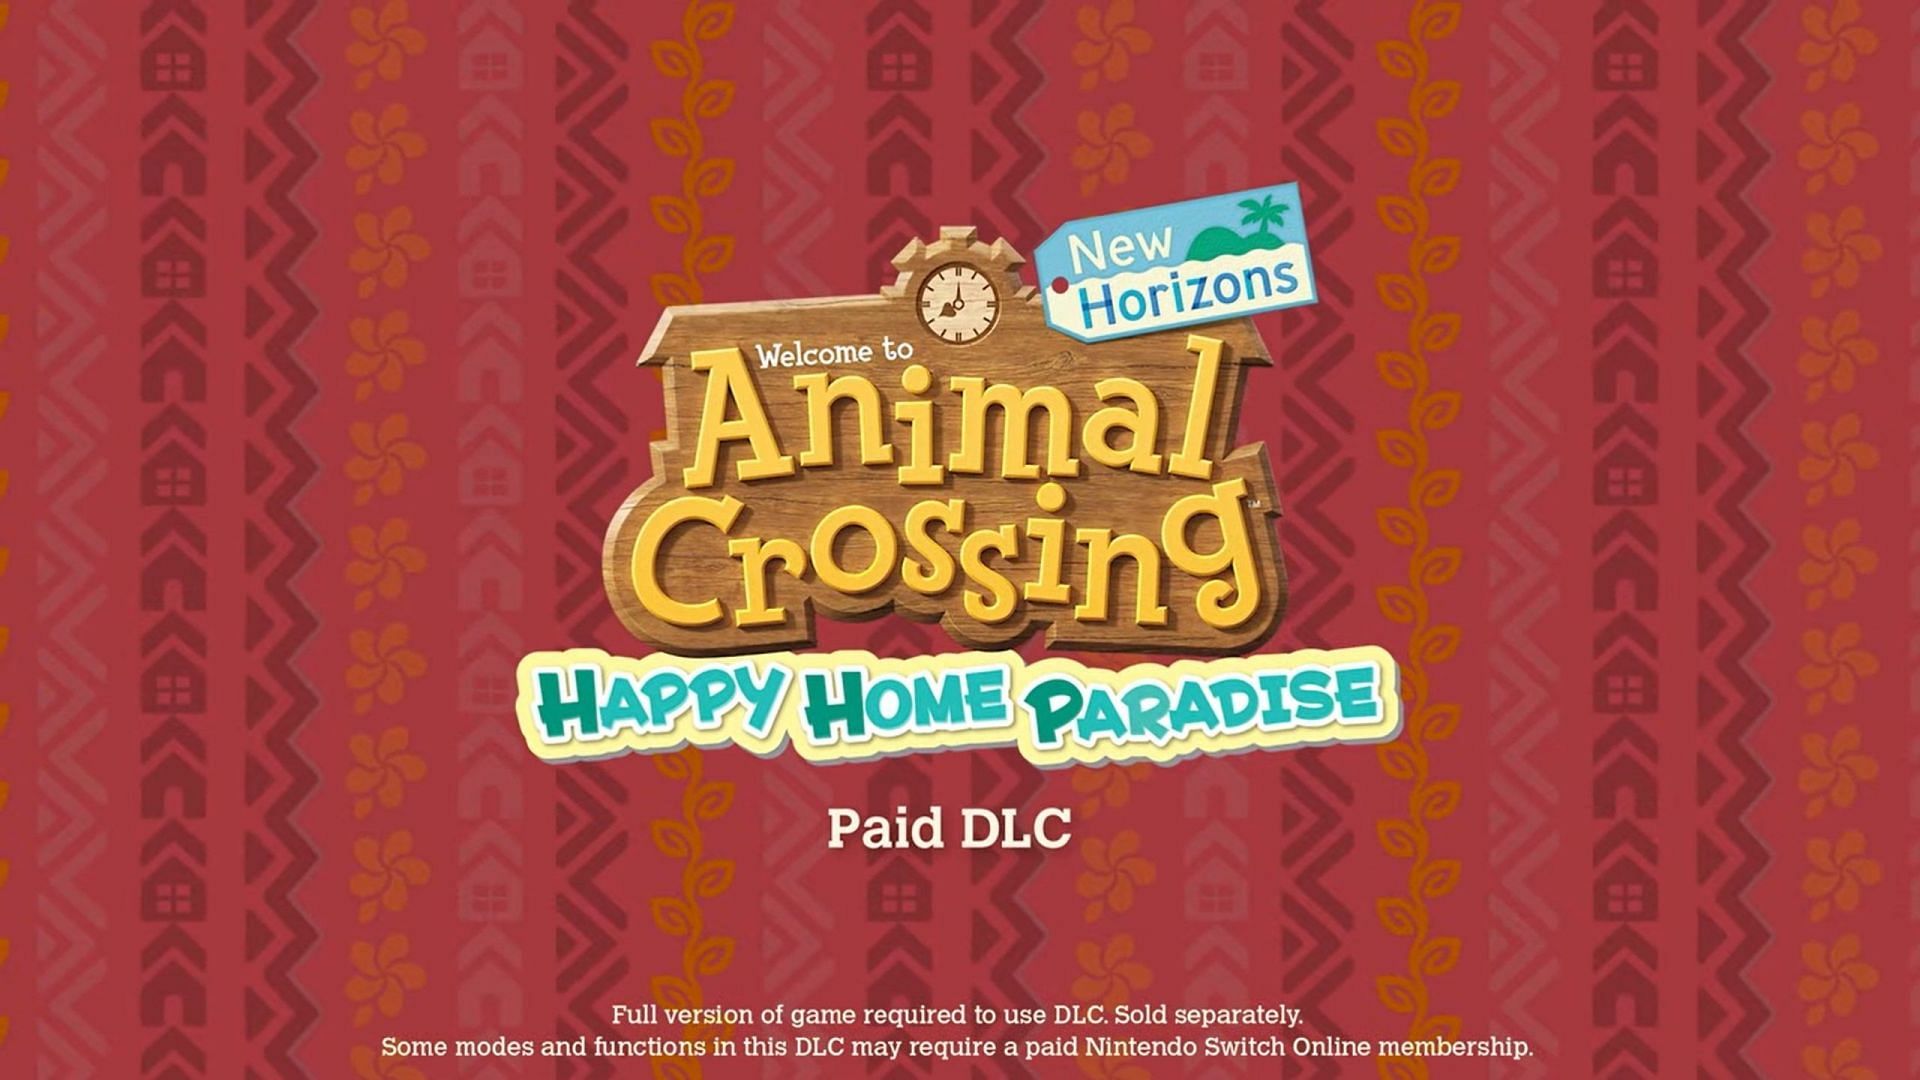 Happy Home Paradise essentially brings Happy Home Designer into New Horizons. (Image via Nintendo)